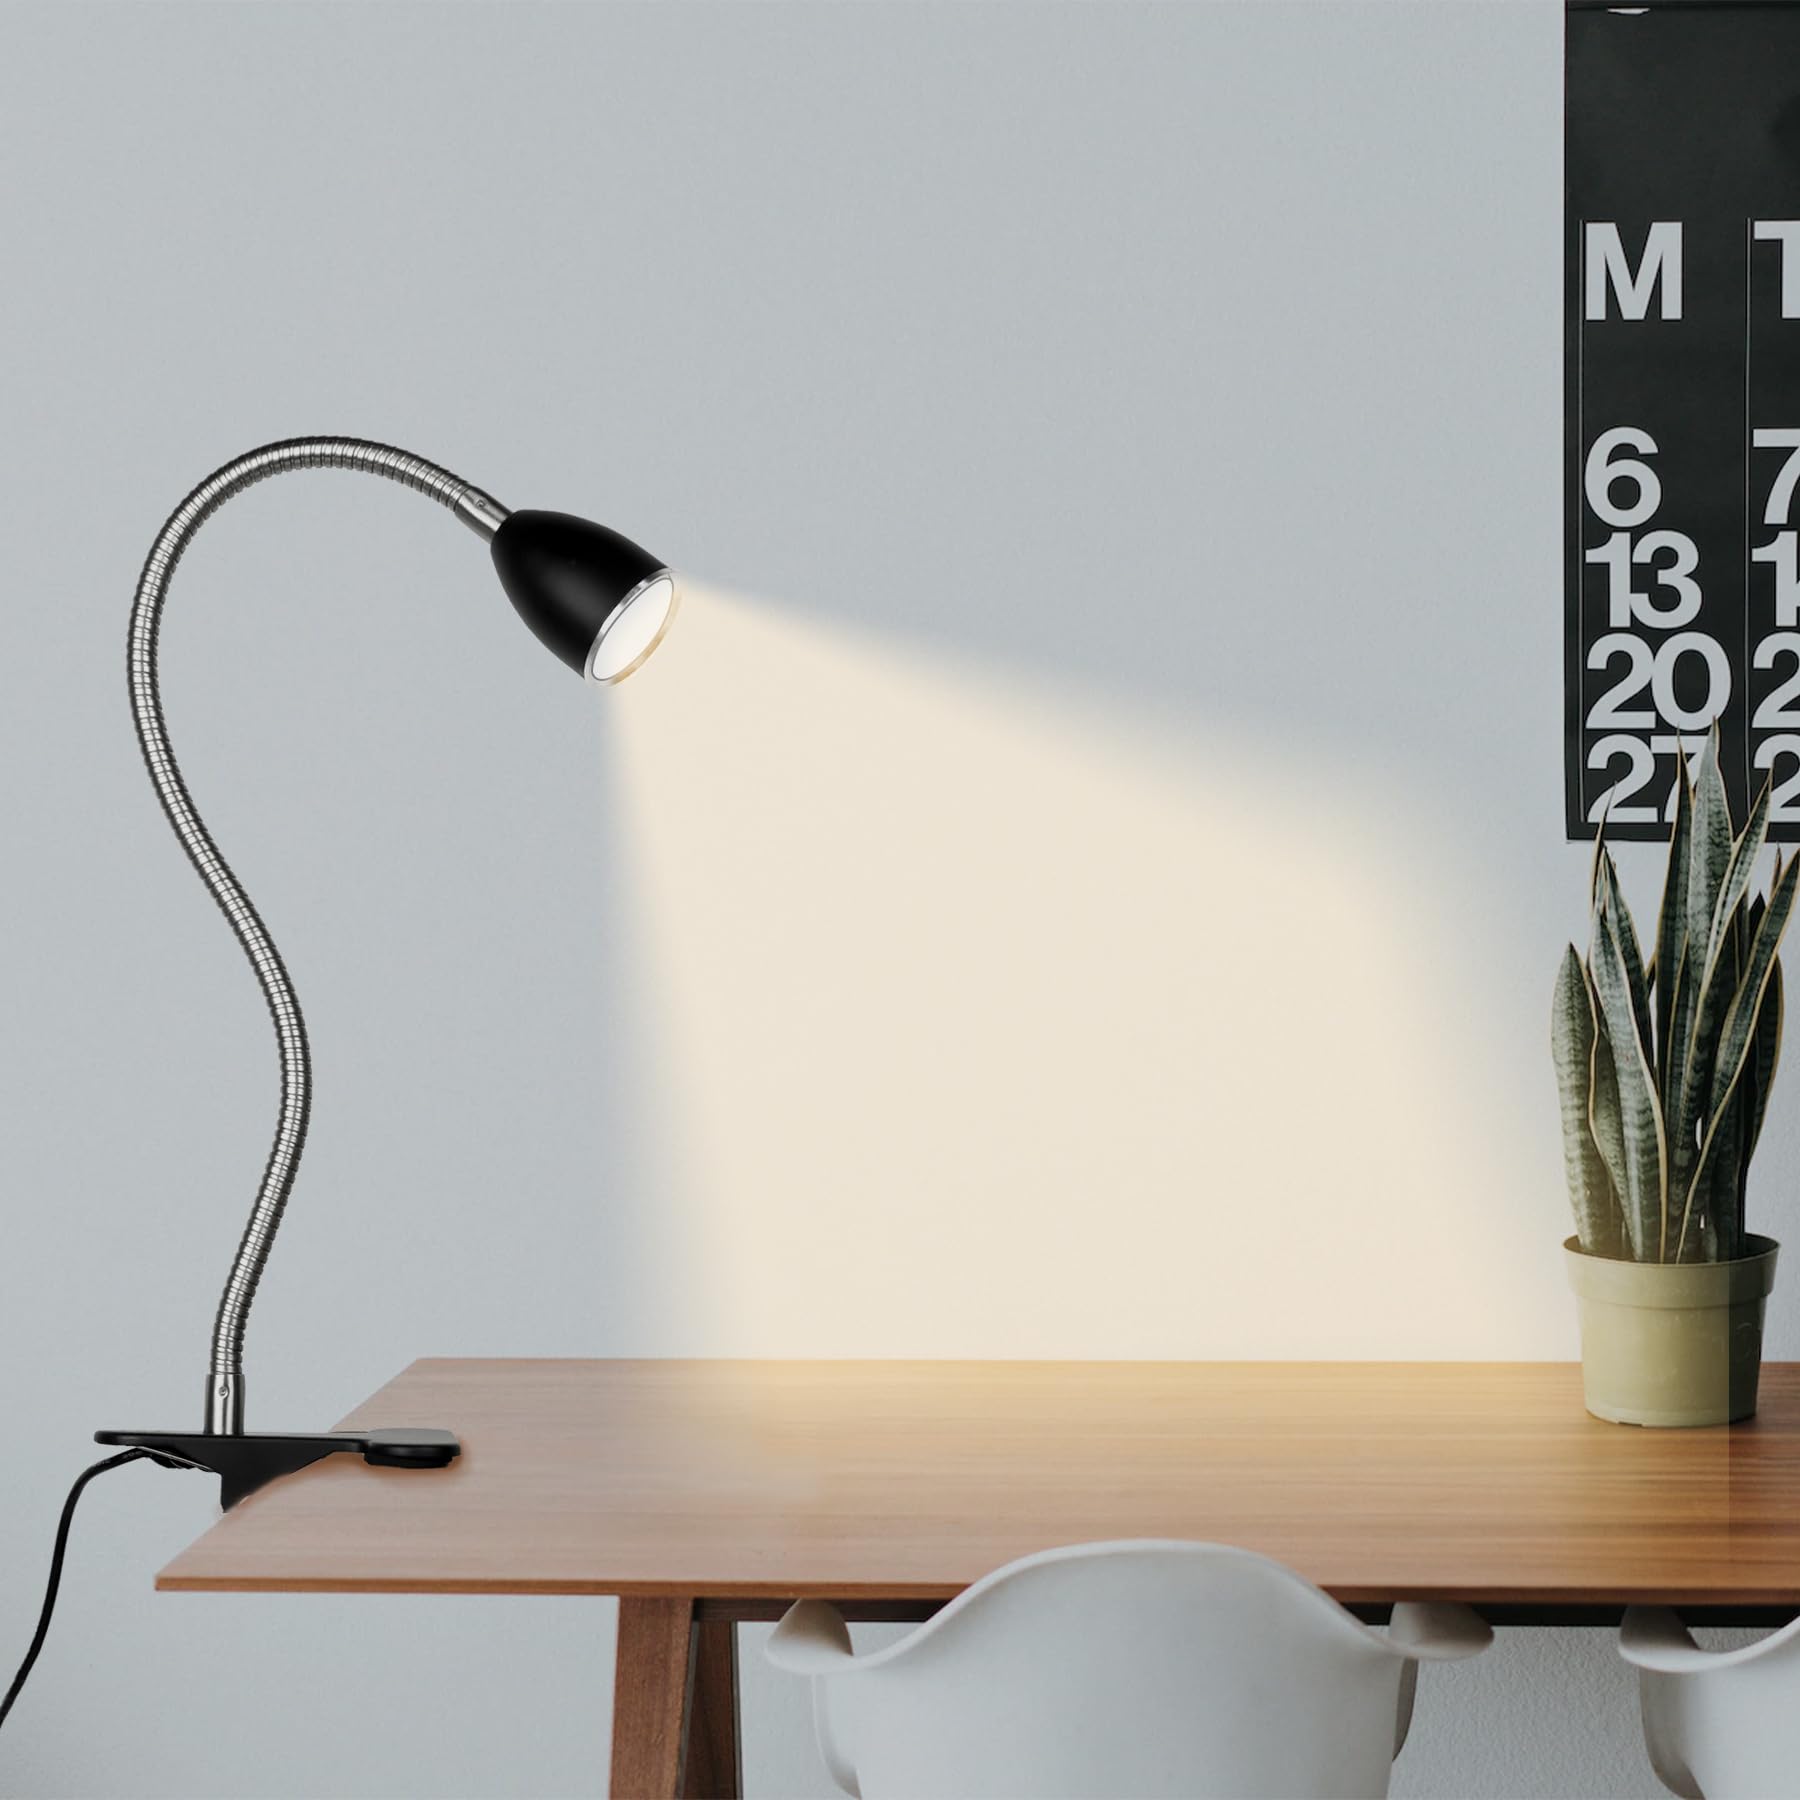 Desk lamp Eye-Caring Table Lamps, 360°Rotation Gooseneck Clip on Lamp Reading Light, Portable Reading Book Light, Clamp Light, Study Desk Lamps for Bedroom and Office Home Lighting (Black-C01)